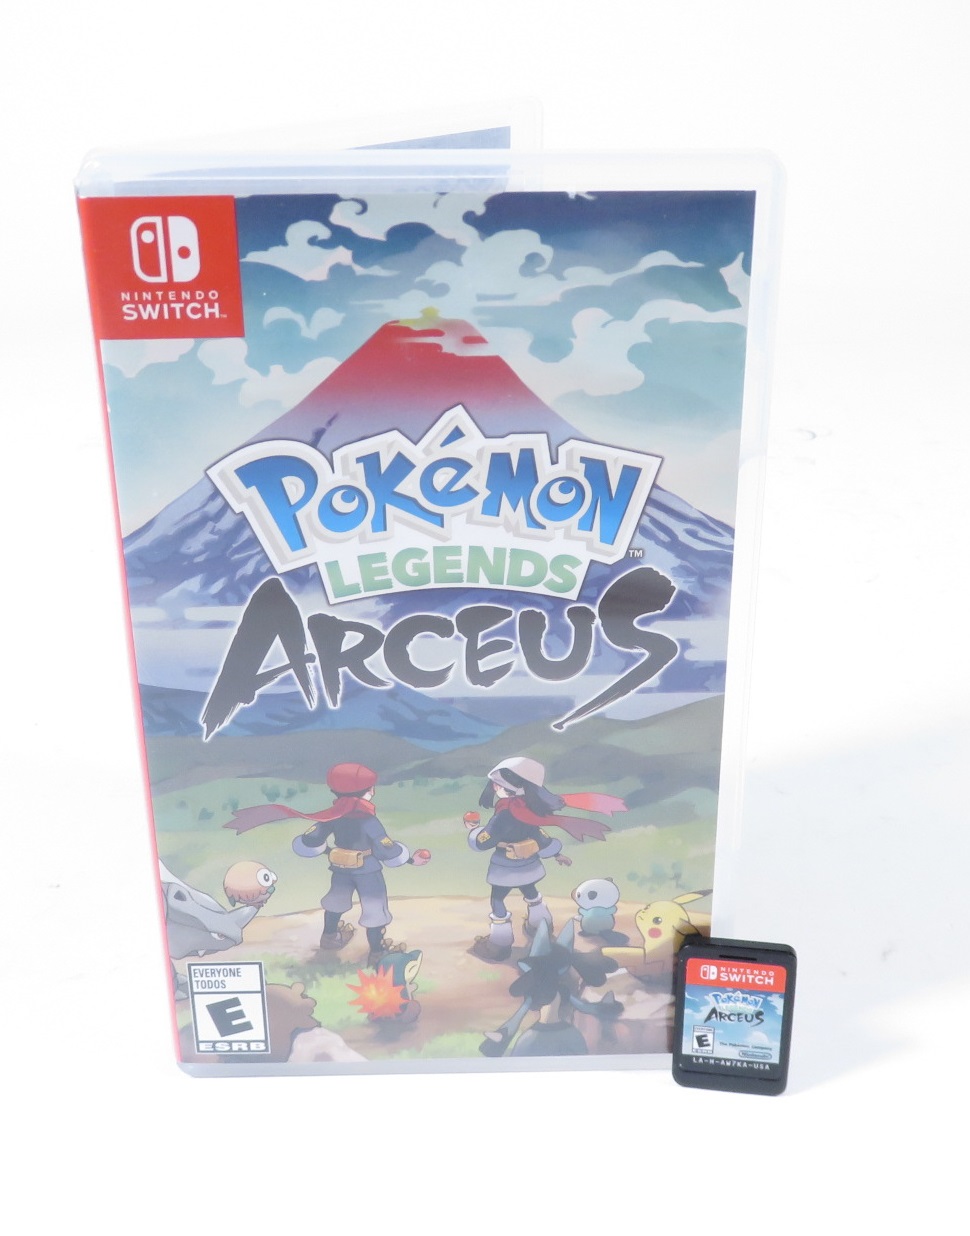 Pokemon Legends Arceus - Nintendo Switch - U.S. Version